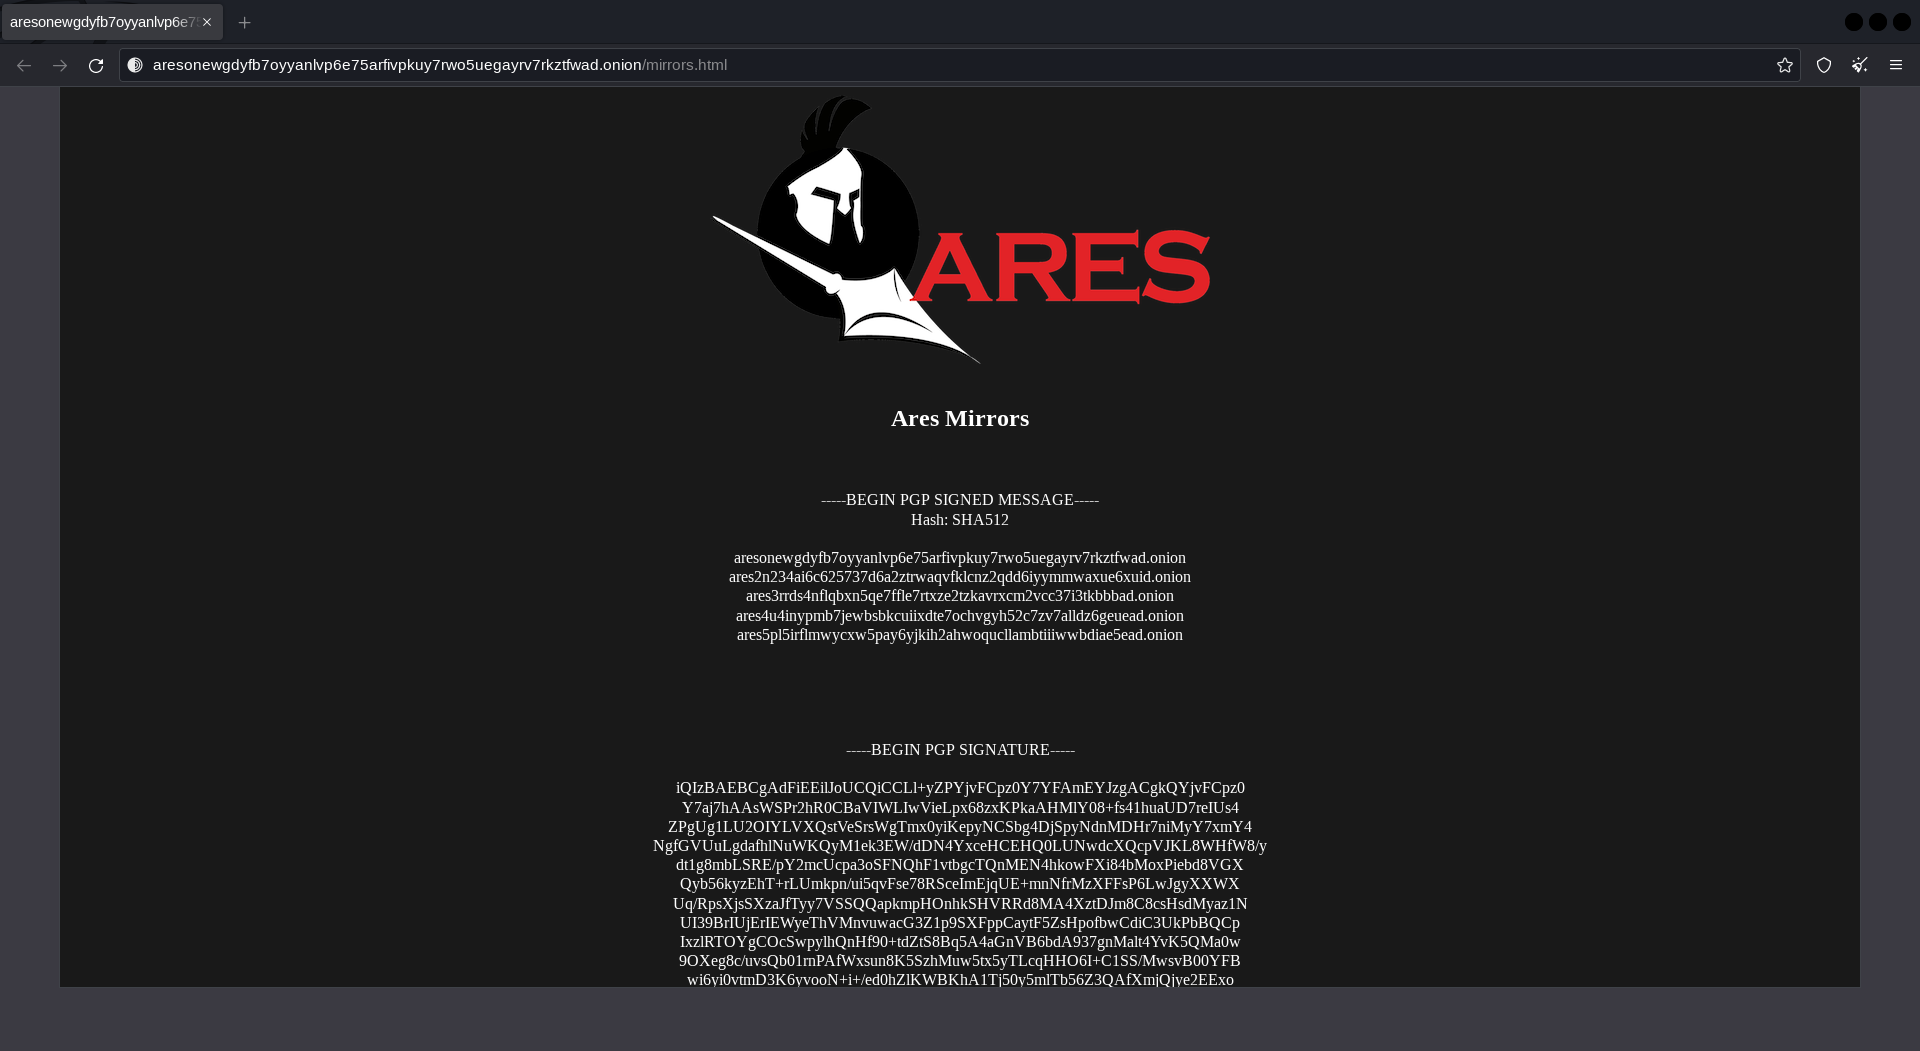 Ares darknet market payments